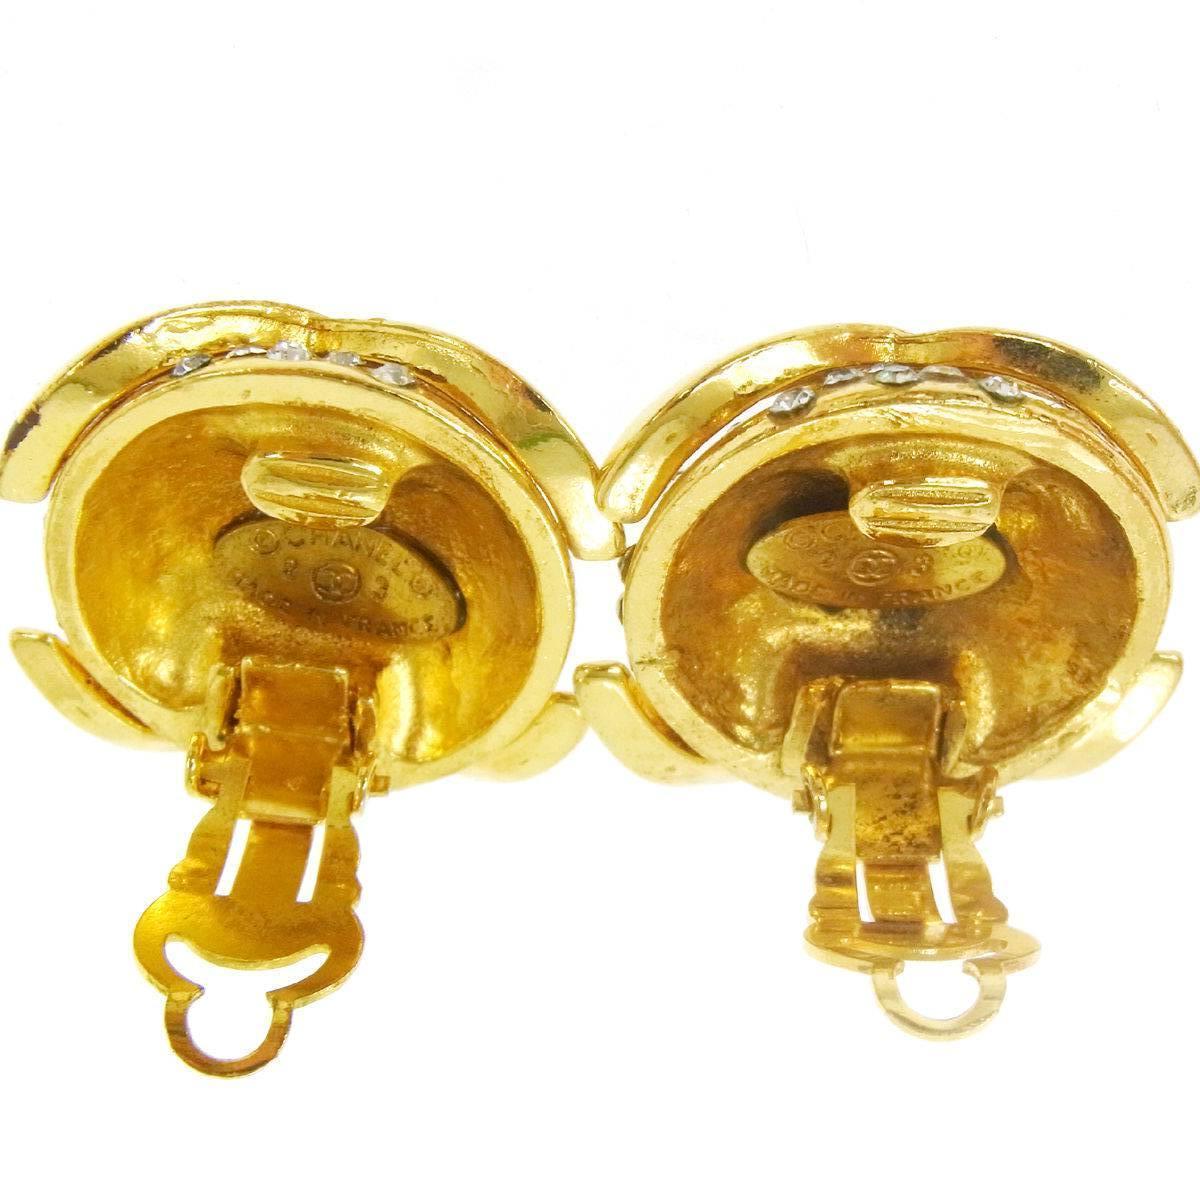 Chanel Gold Charm Rhinestone Evening Statement Stud Earrings

Metal
Rhinestone
Gold tone
Clip on closure
Made in France
Diameter 1"